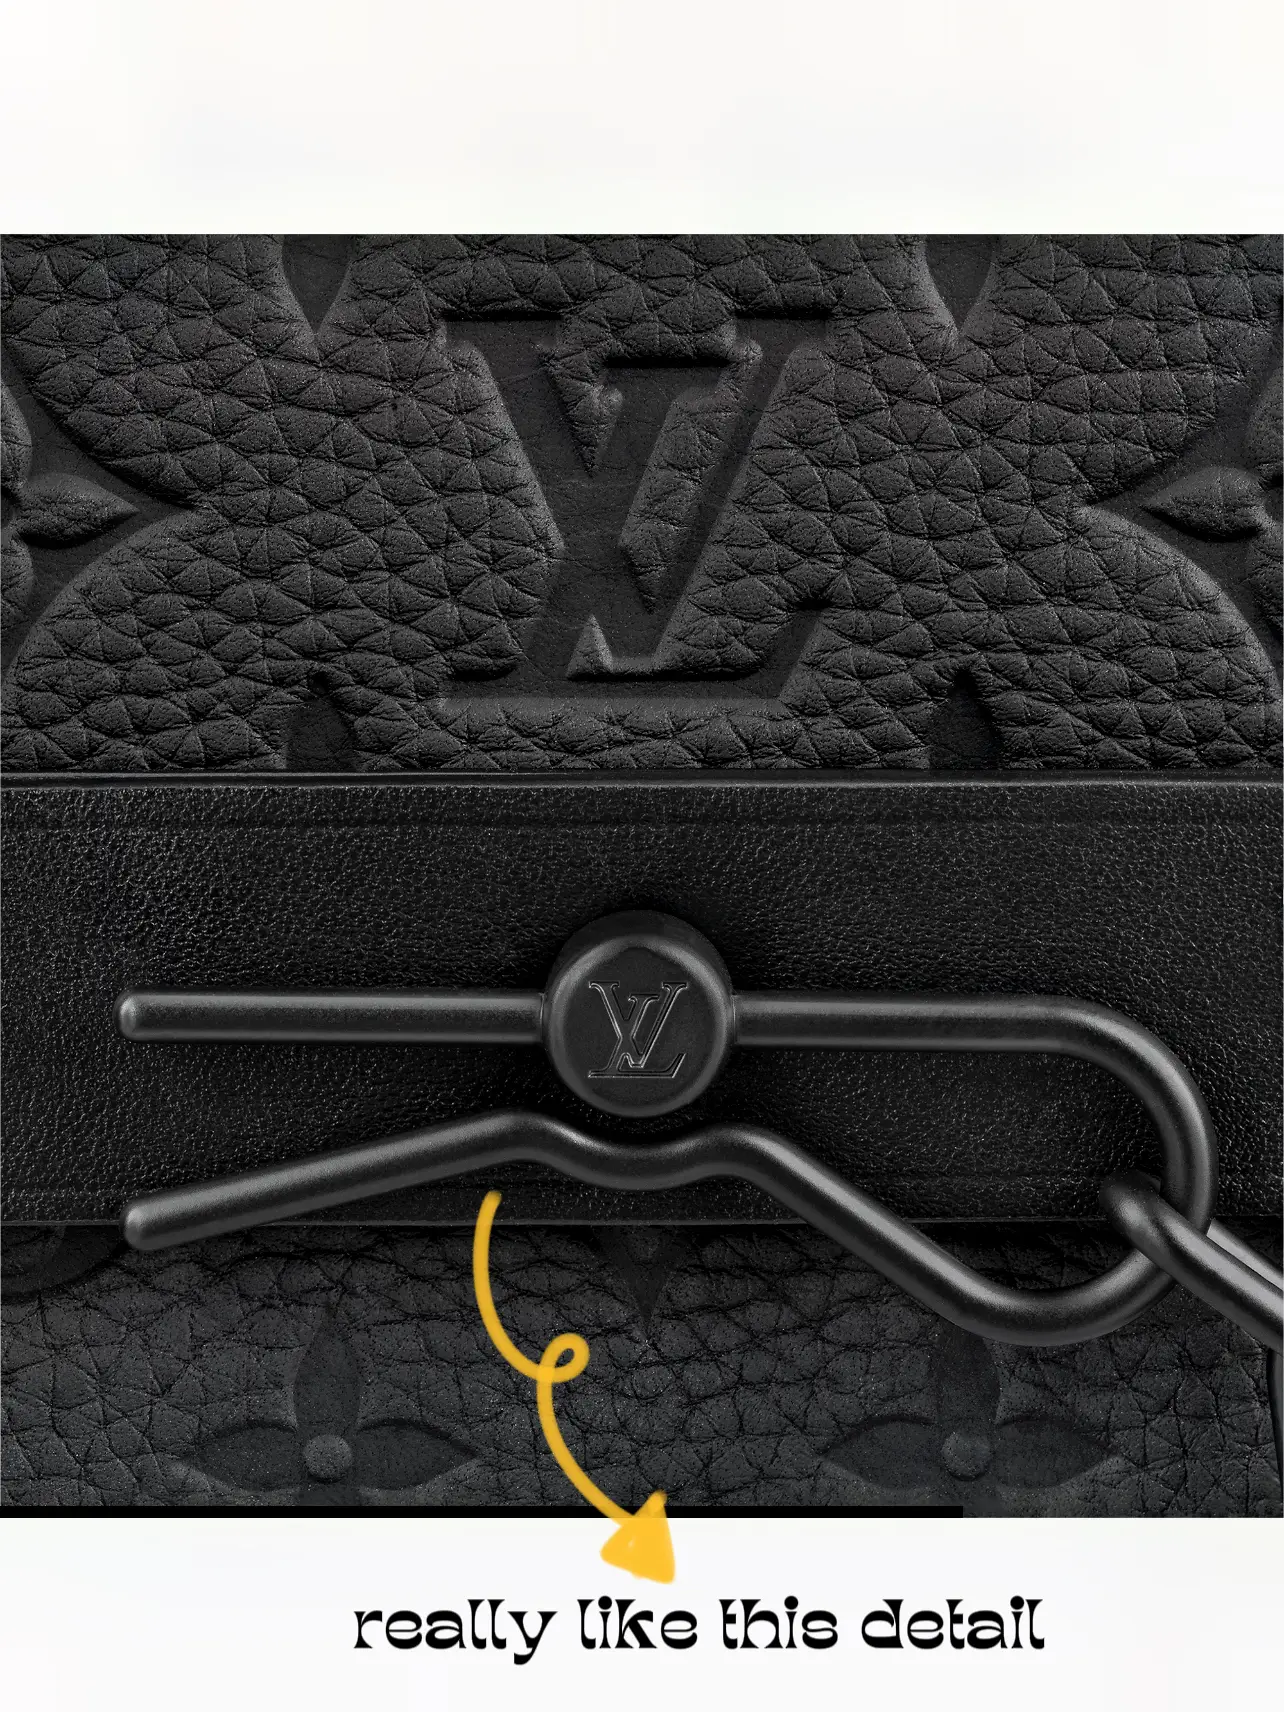 Louis Vuitton CHEAPER in Europe?? GUIDE to LUXURY Shopping in EUROPE